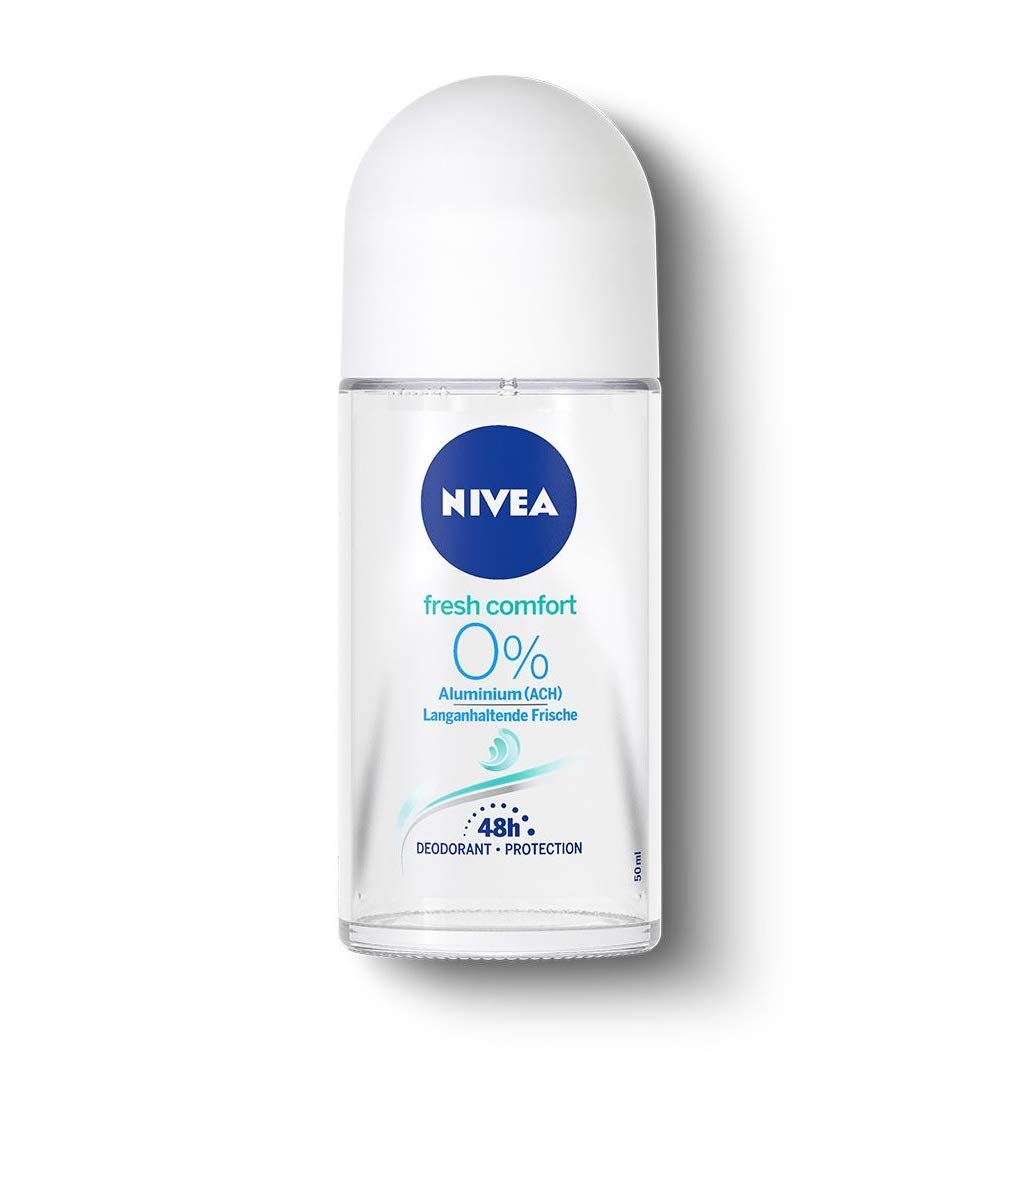 Nivea Fresh Comfort 0% Aluminum Salt 50ml